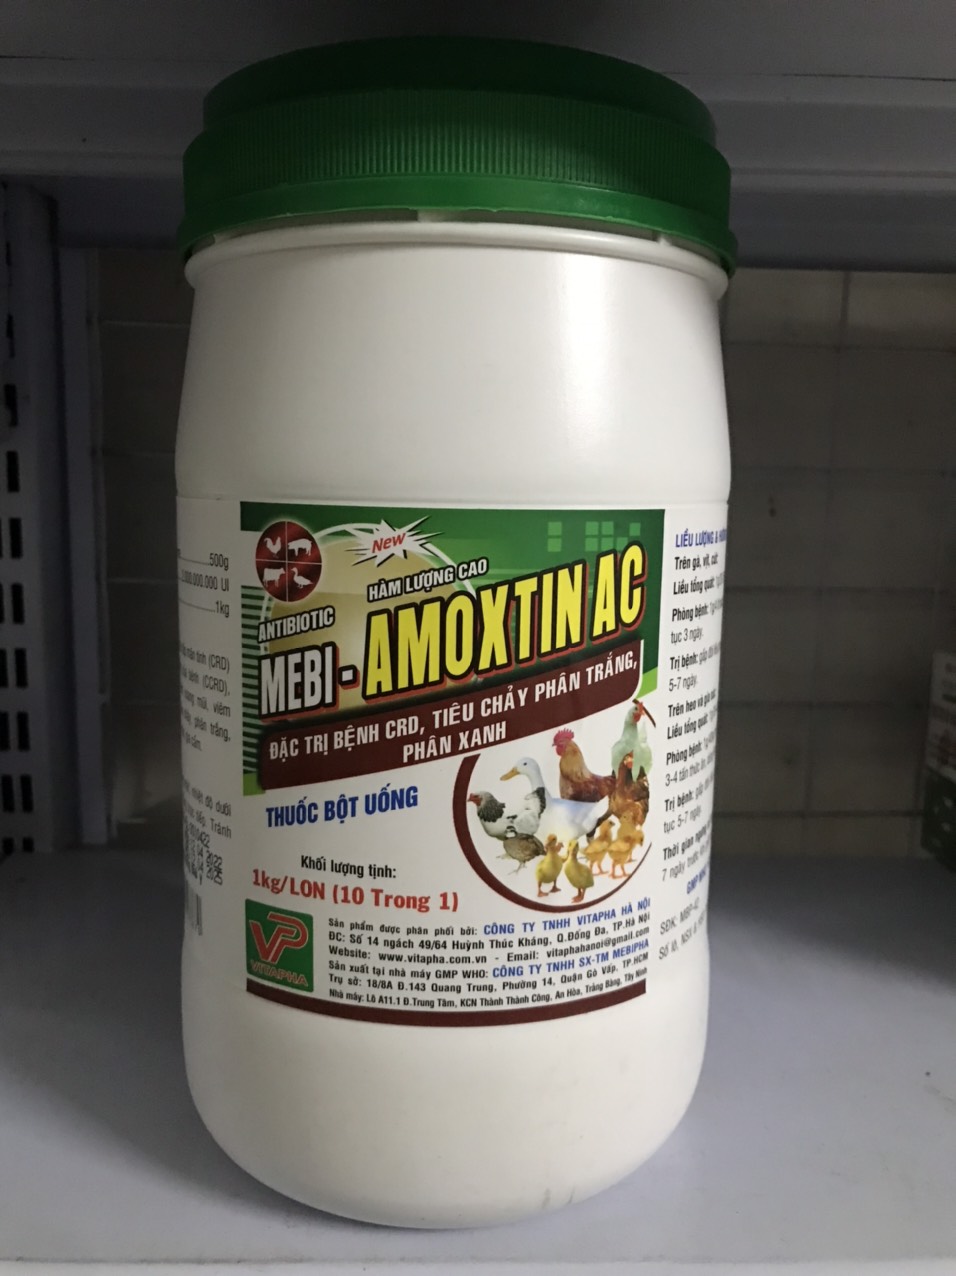 Amoxtin AC/amoxcolis 50/amox 50 (1kg-vitapha) dùng tốt cho chó, mèo, gia súc, gia cầm